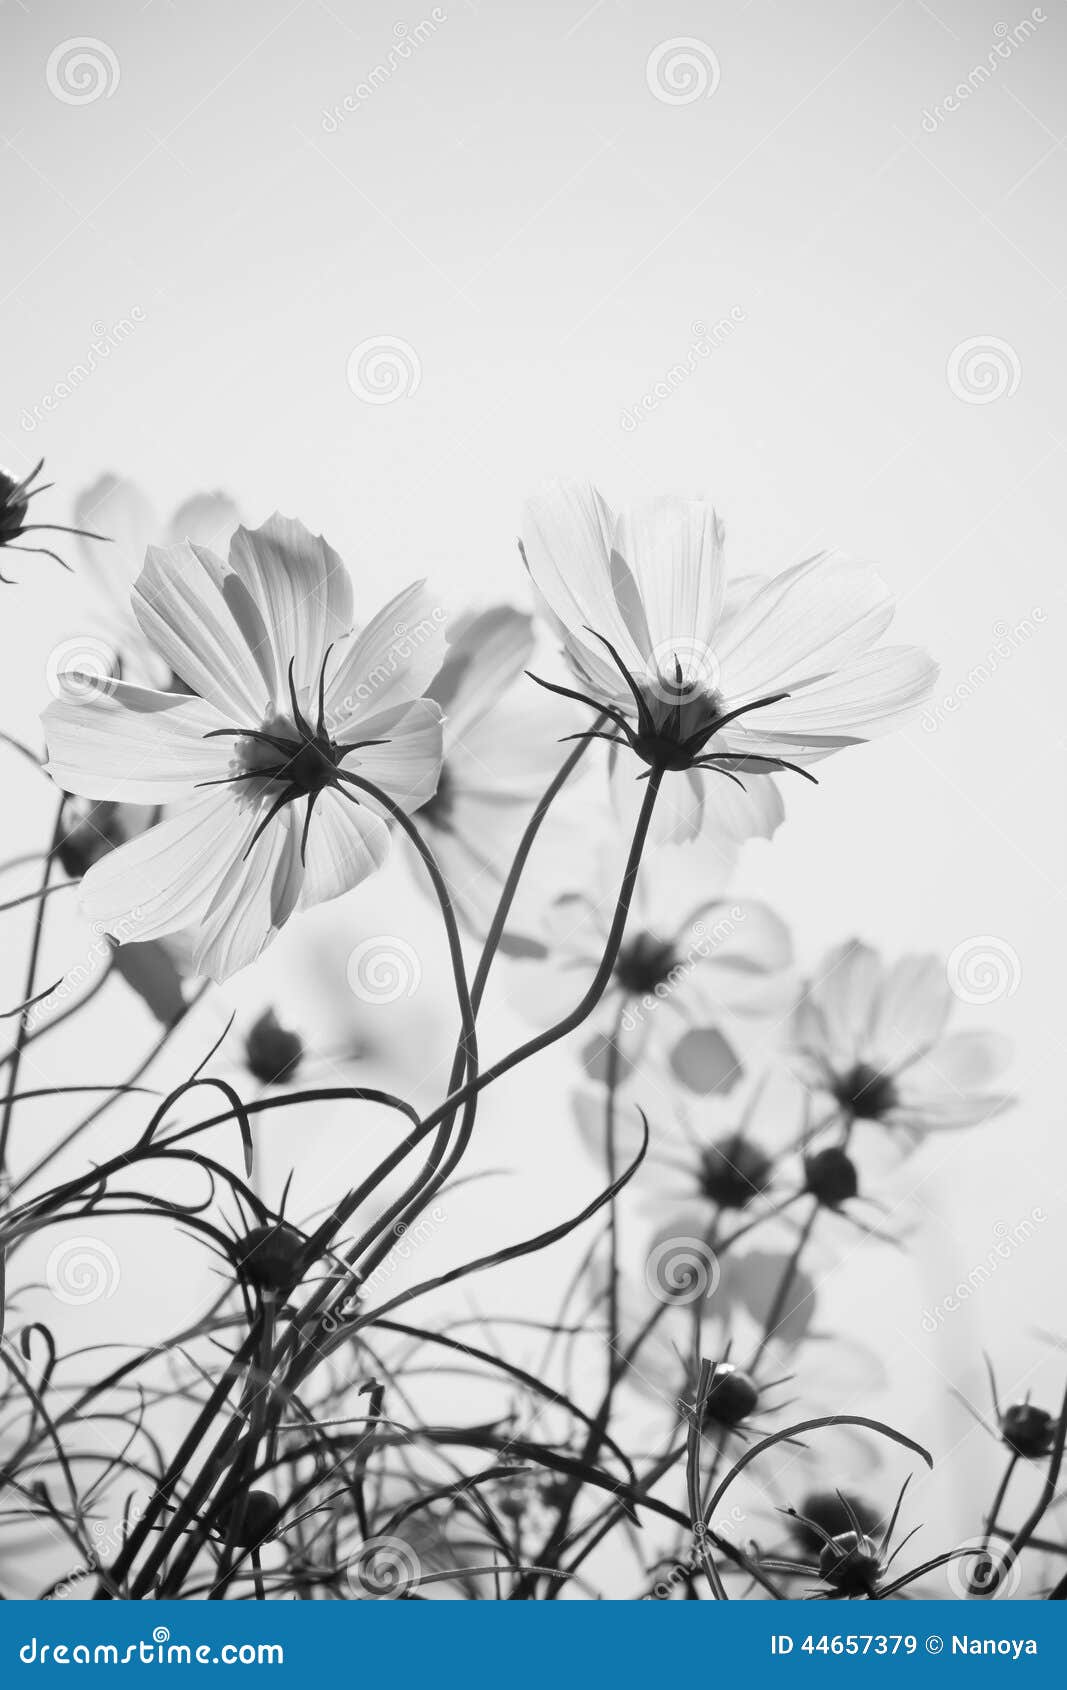 Cosmos Flowers Stock Image Image Of Black Garden Botany 44657379